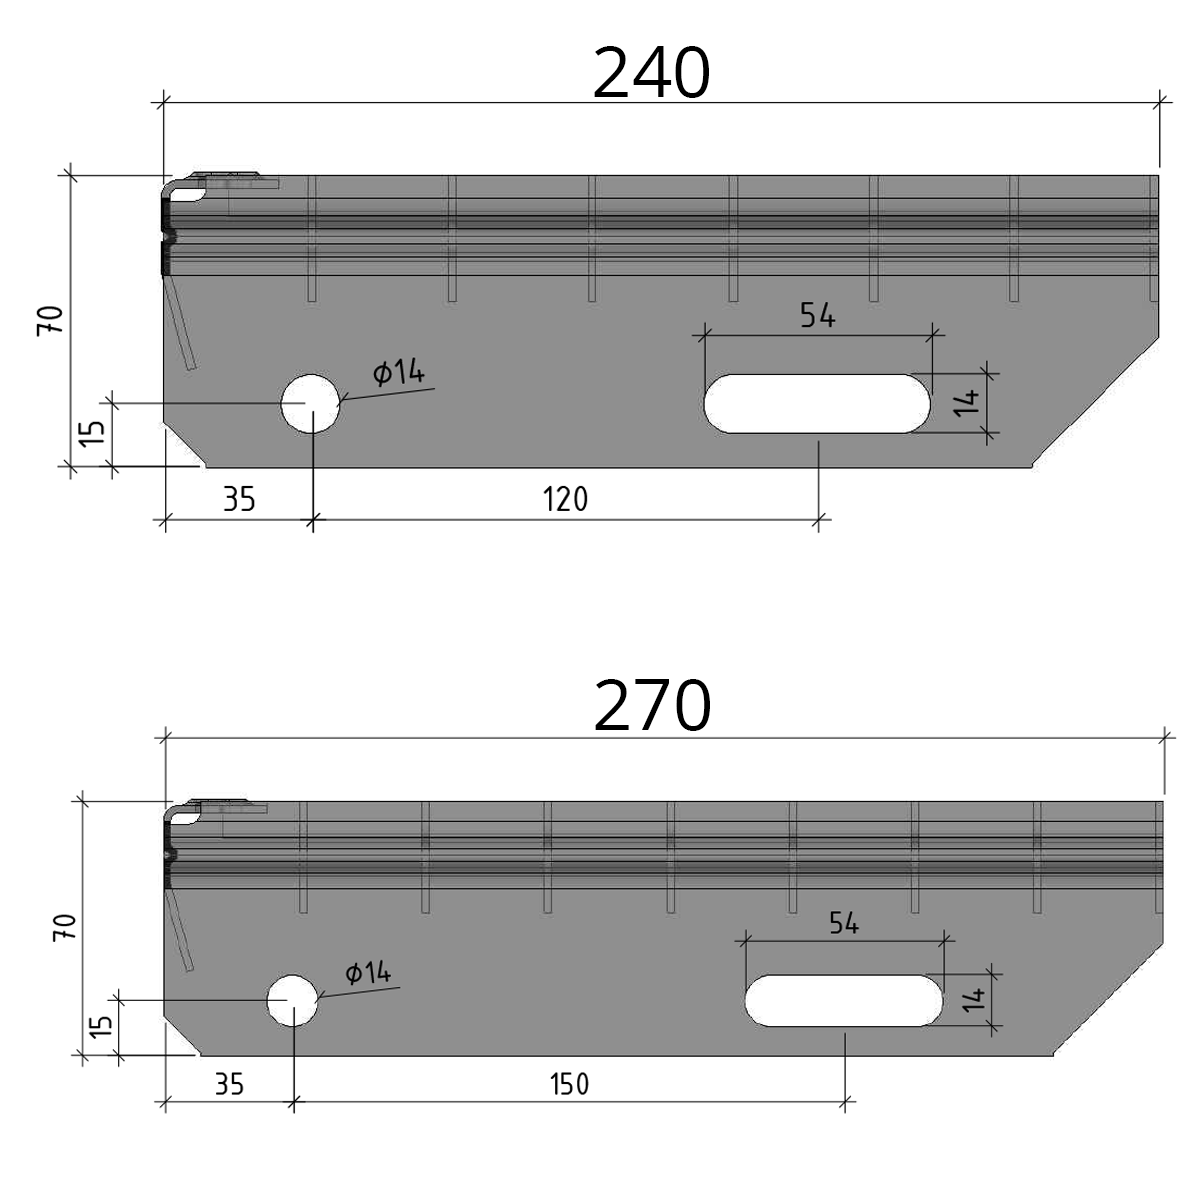 Gitterroststufe Treppenstufe | Maße: 1000x270 mm 30/10 mm | S235JR (St37-2), im Vollbad feuerverzinkt